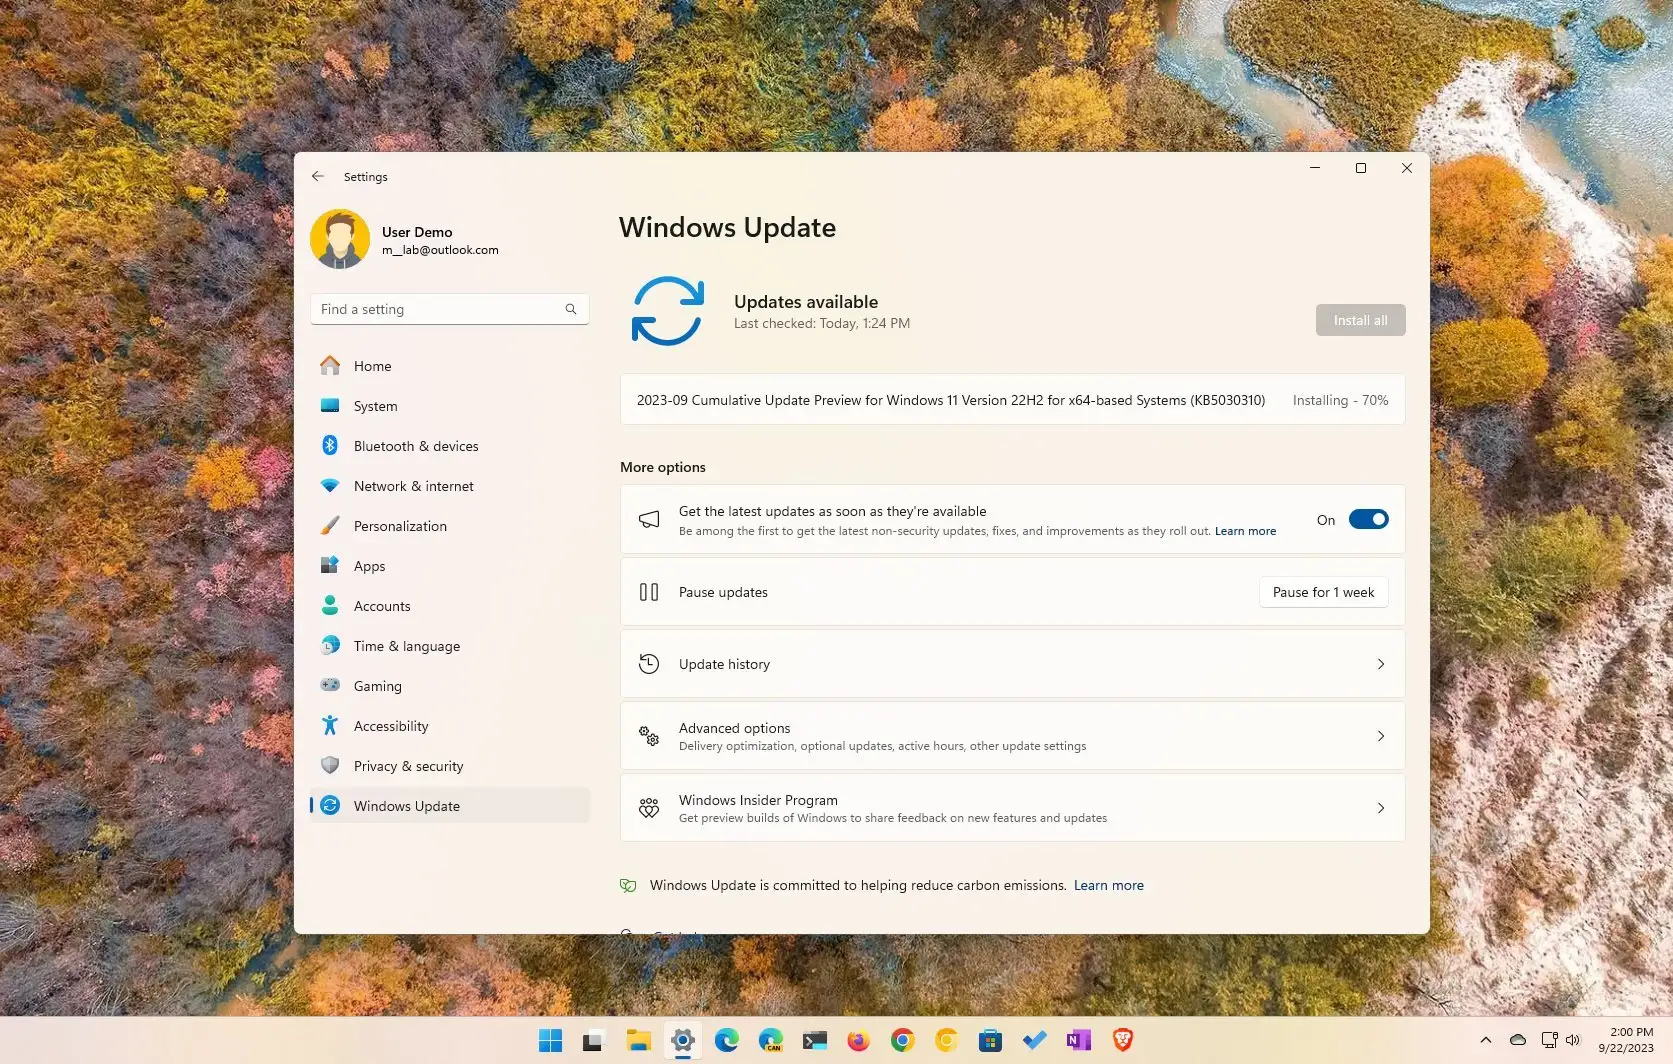 Windows 11 2023 Update l Version 23H2, Build 22631